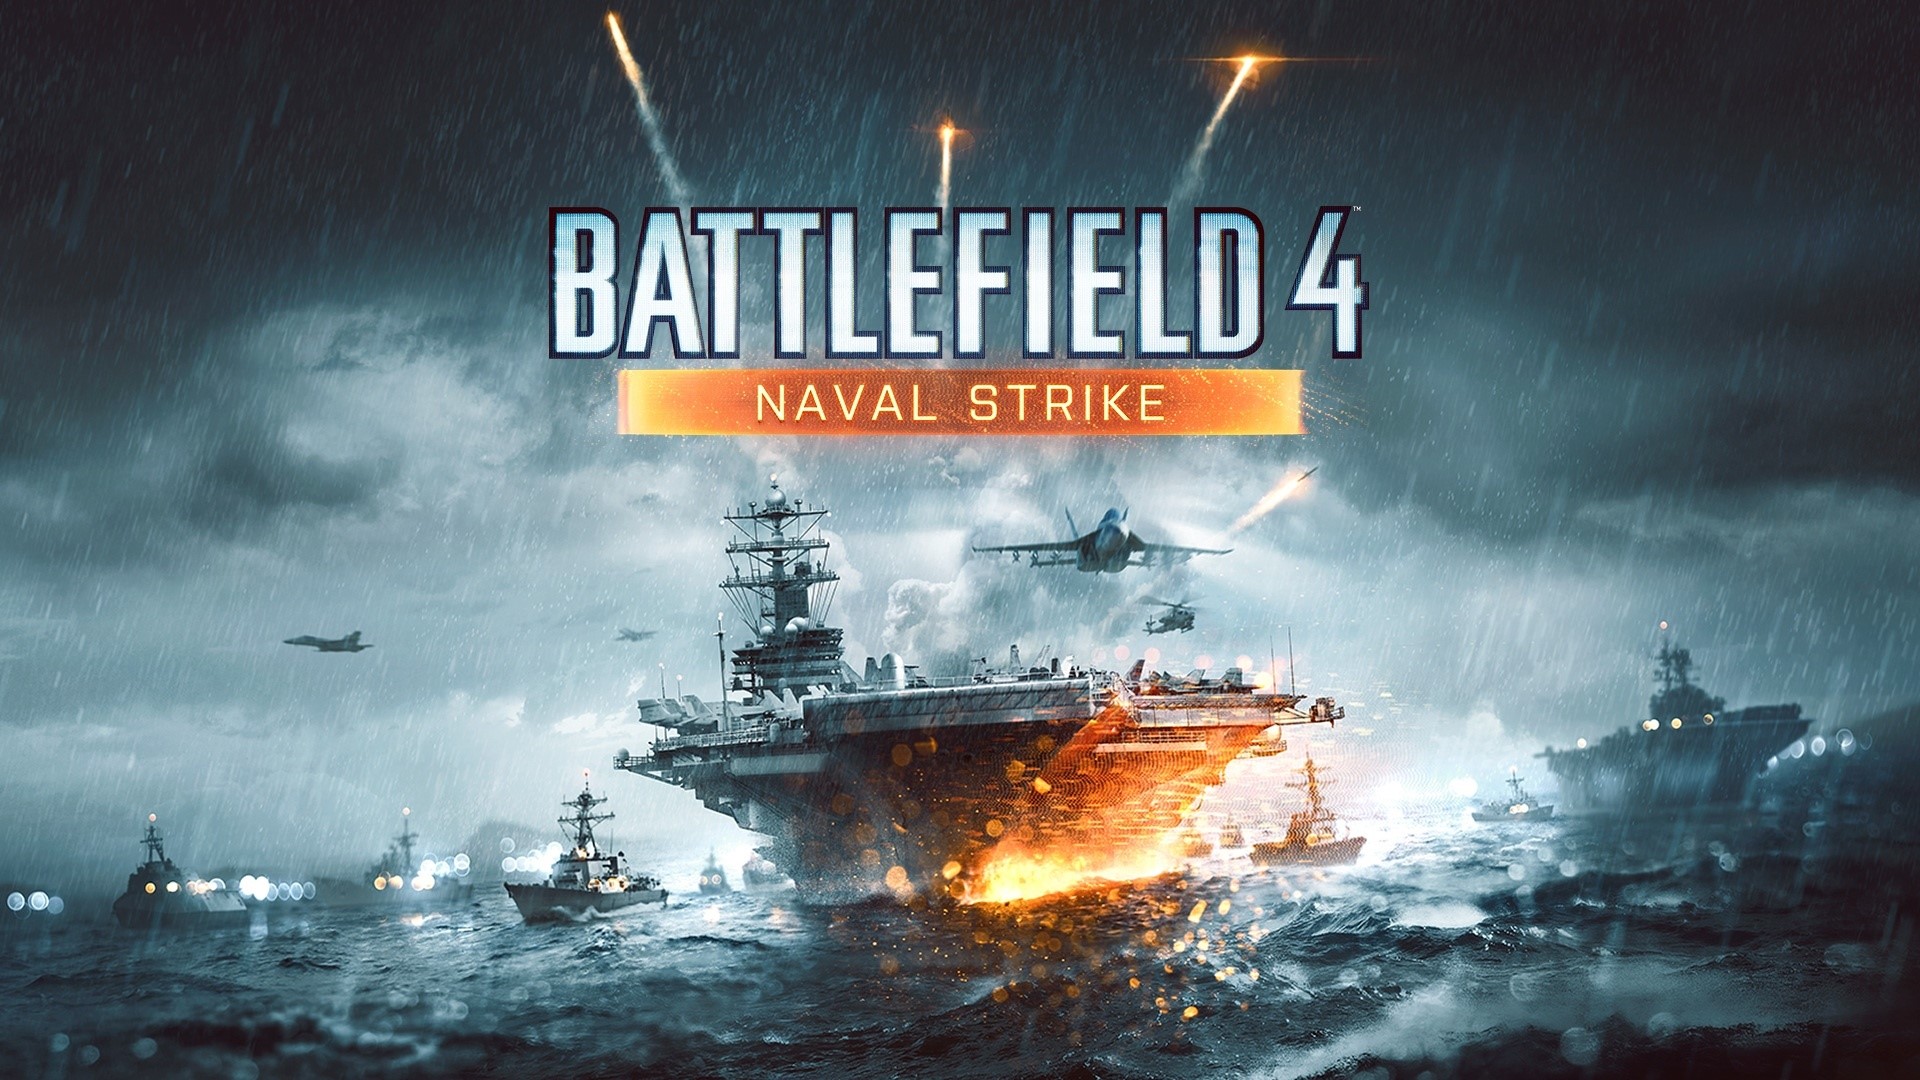 Battlefield 4 Naval Strike Wallpaper Full HD ID:888